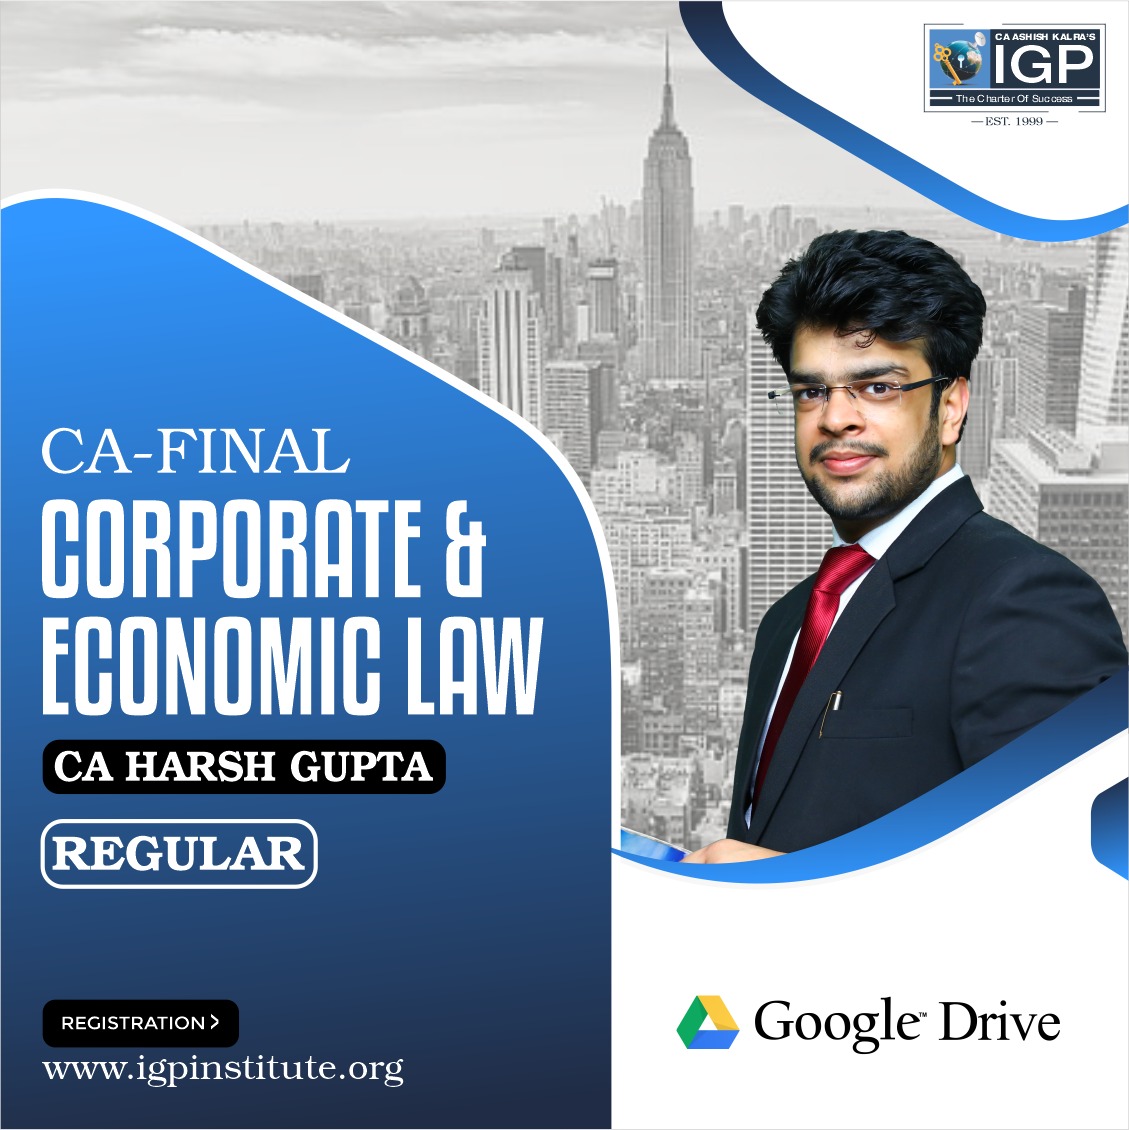 CA -Final- Law